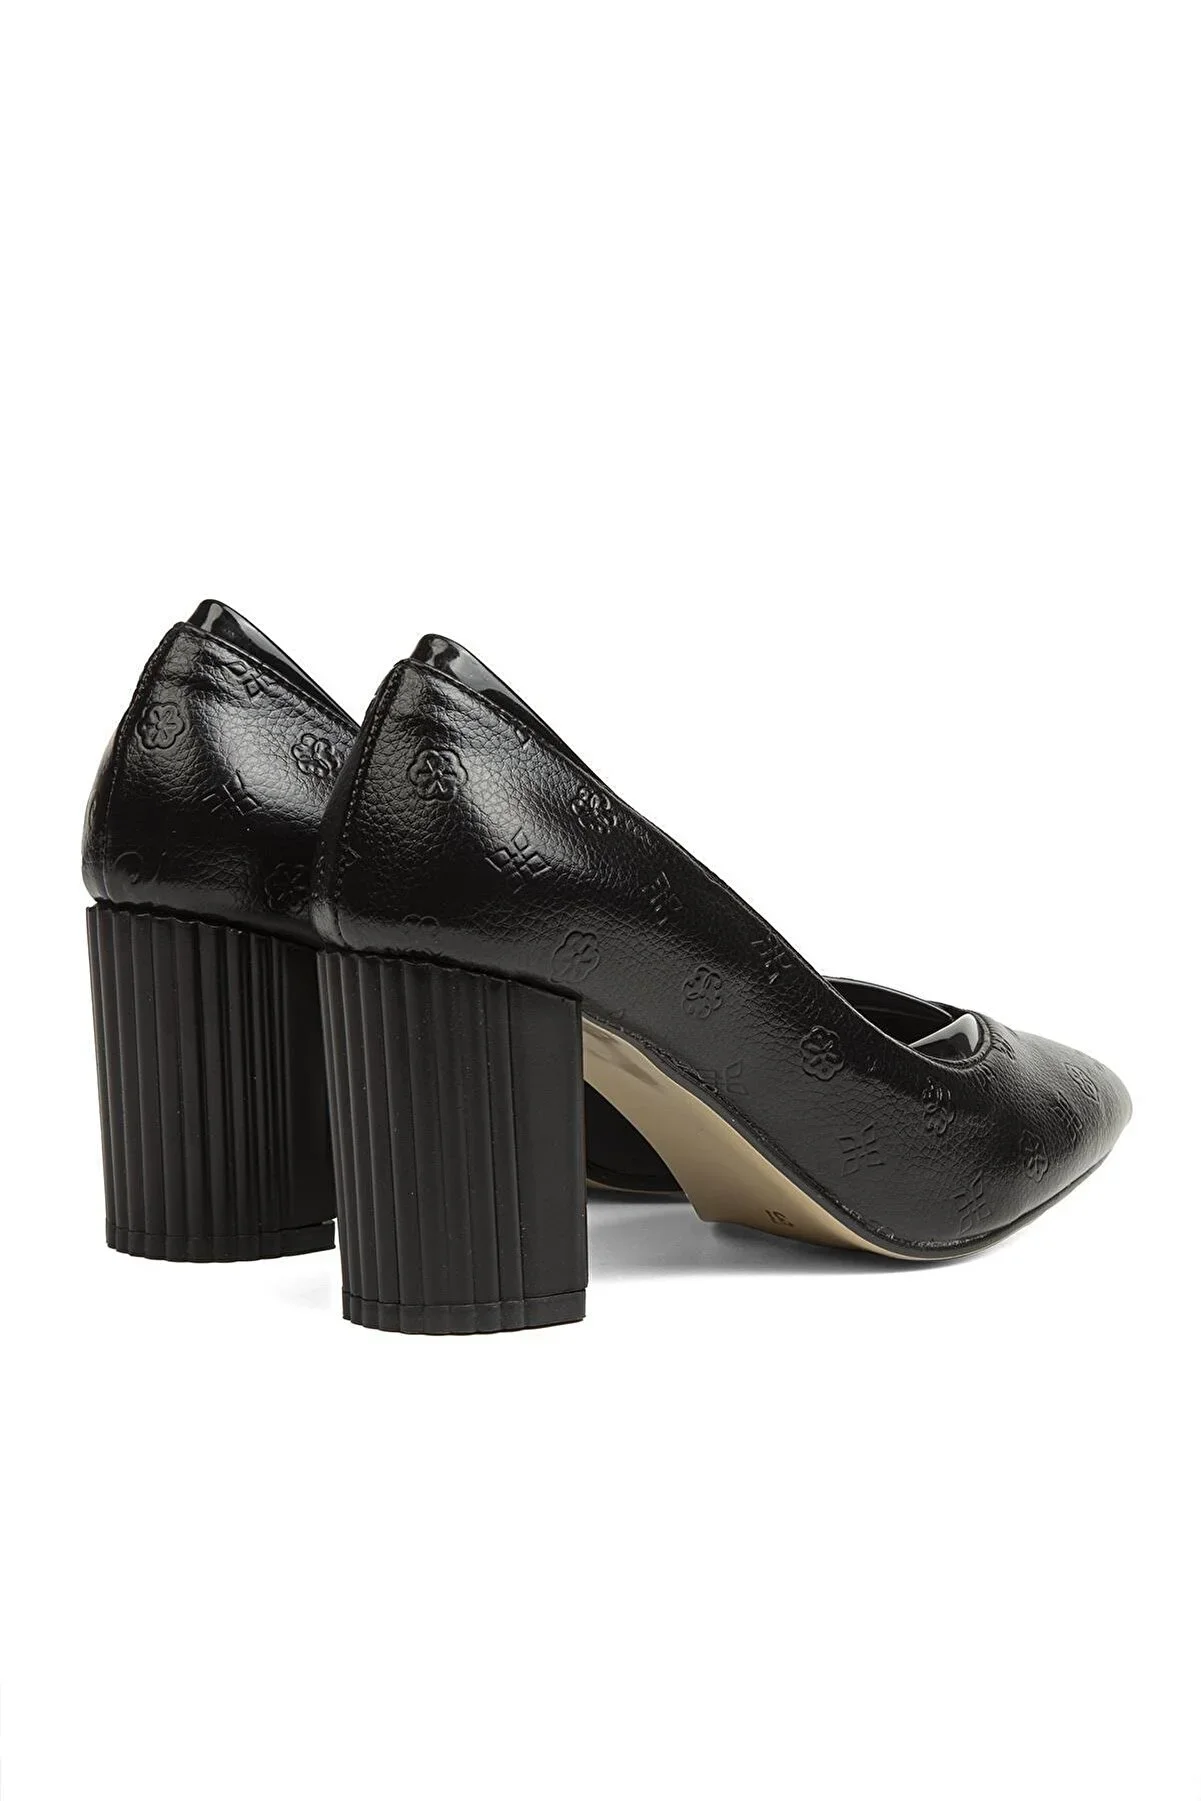 Kadın Topuklu Ayakkabı PC-51199-Siyah - 4